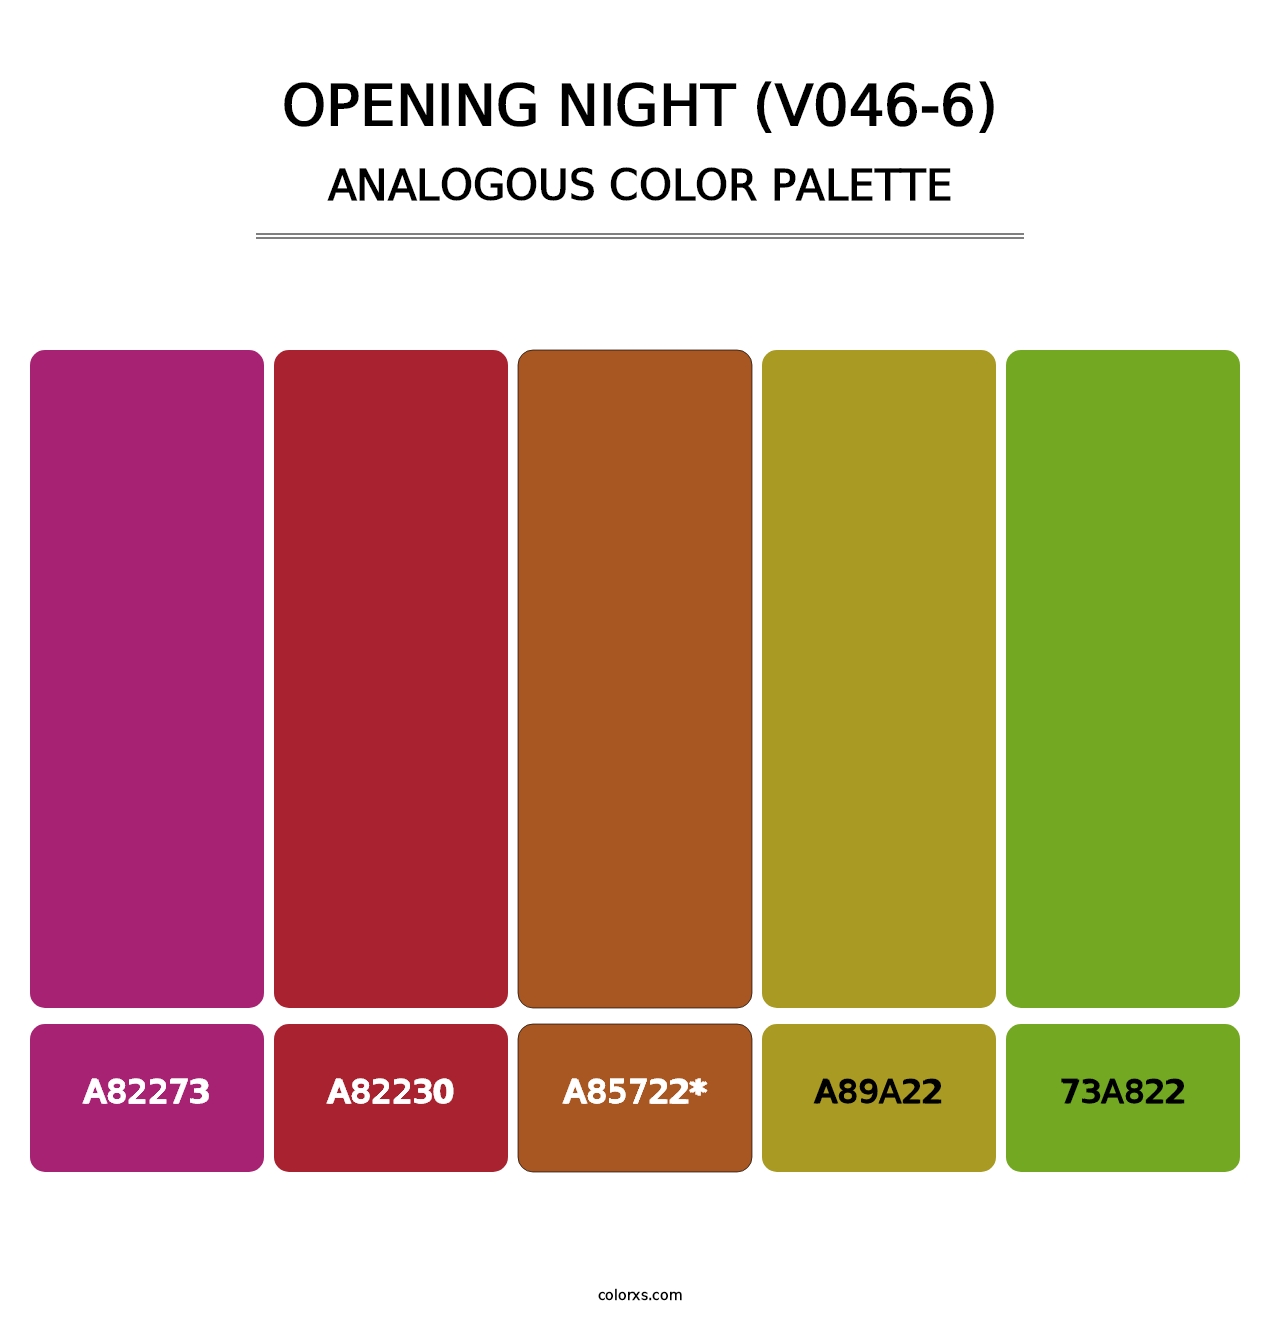 Opening Night (V046-6) - Analogous Color Palette